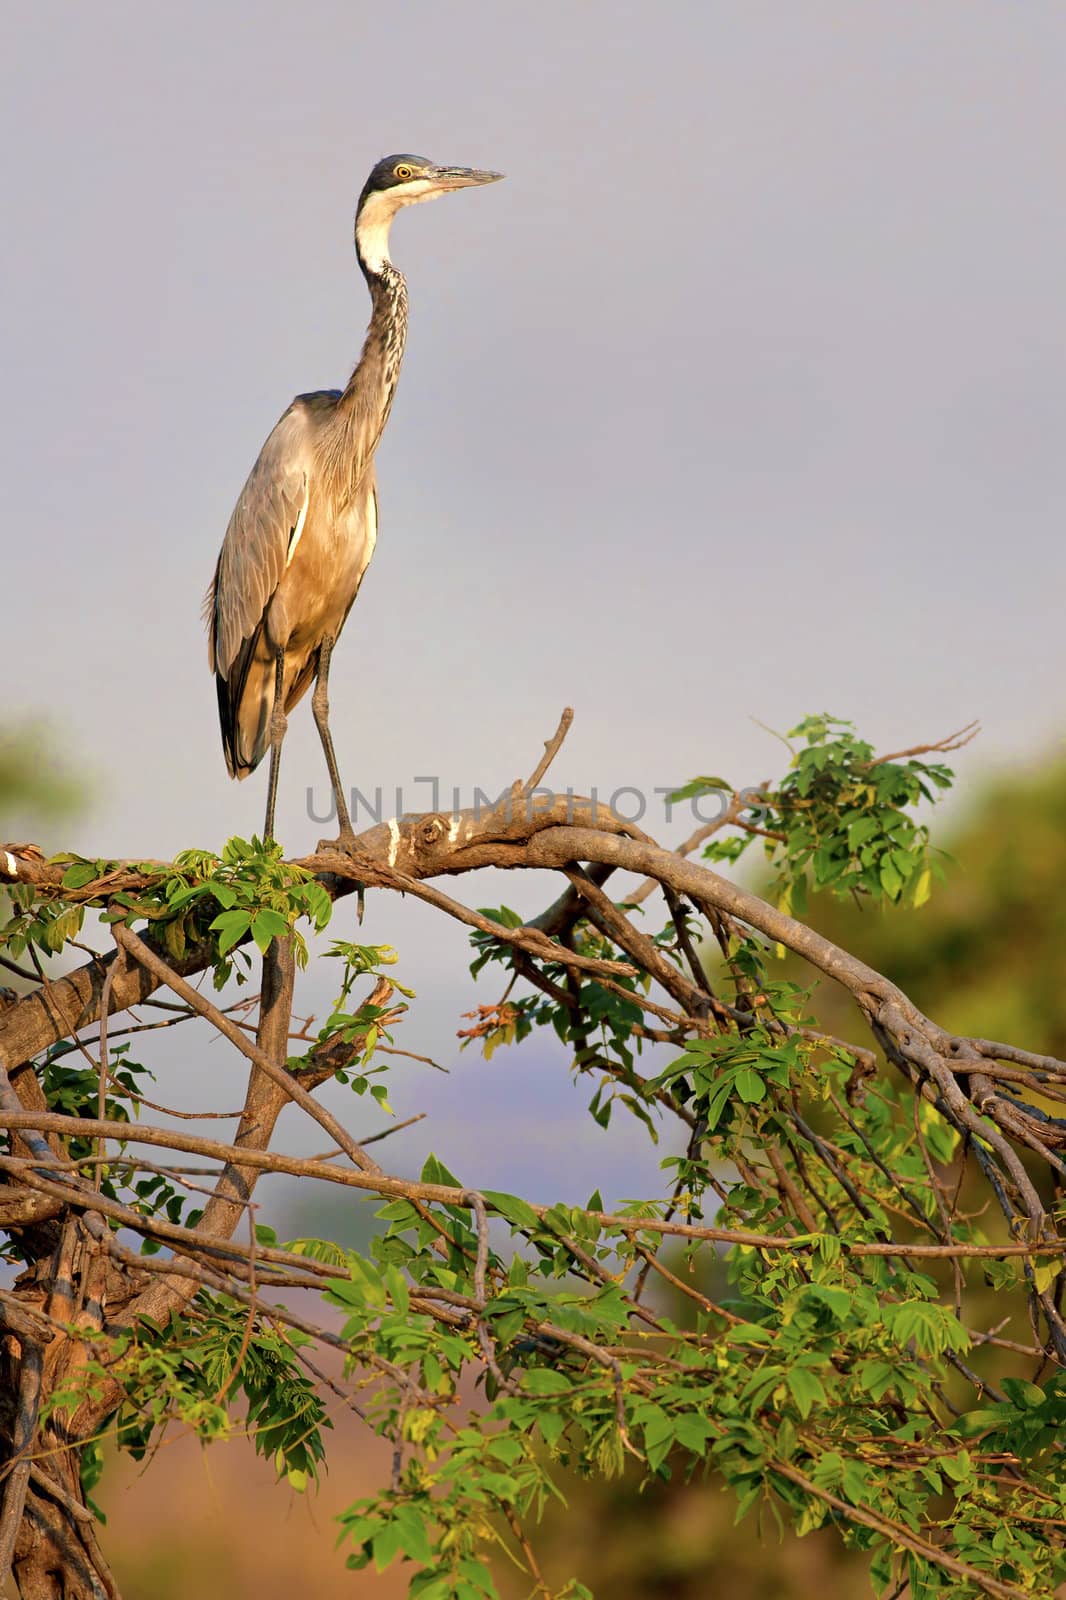 Black-Headed Heron standing on a branch in the savannah